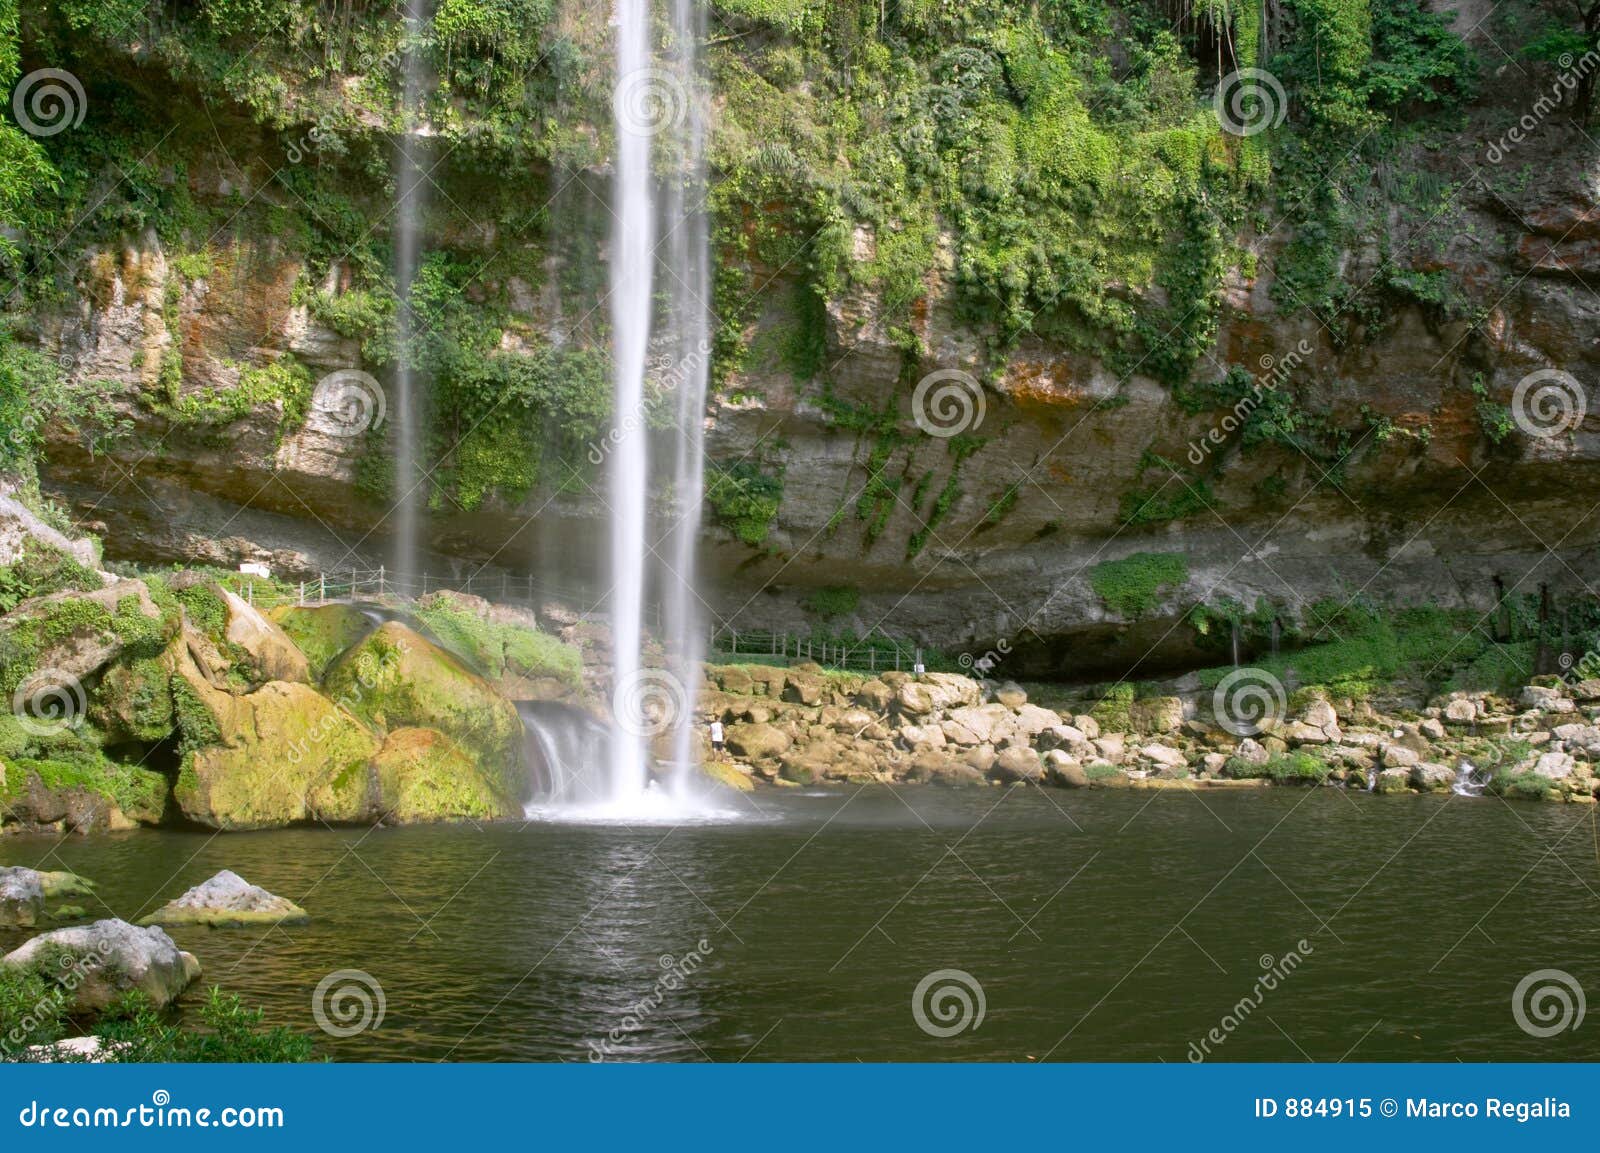 cascada (waterfall) misol ha